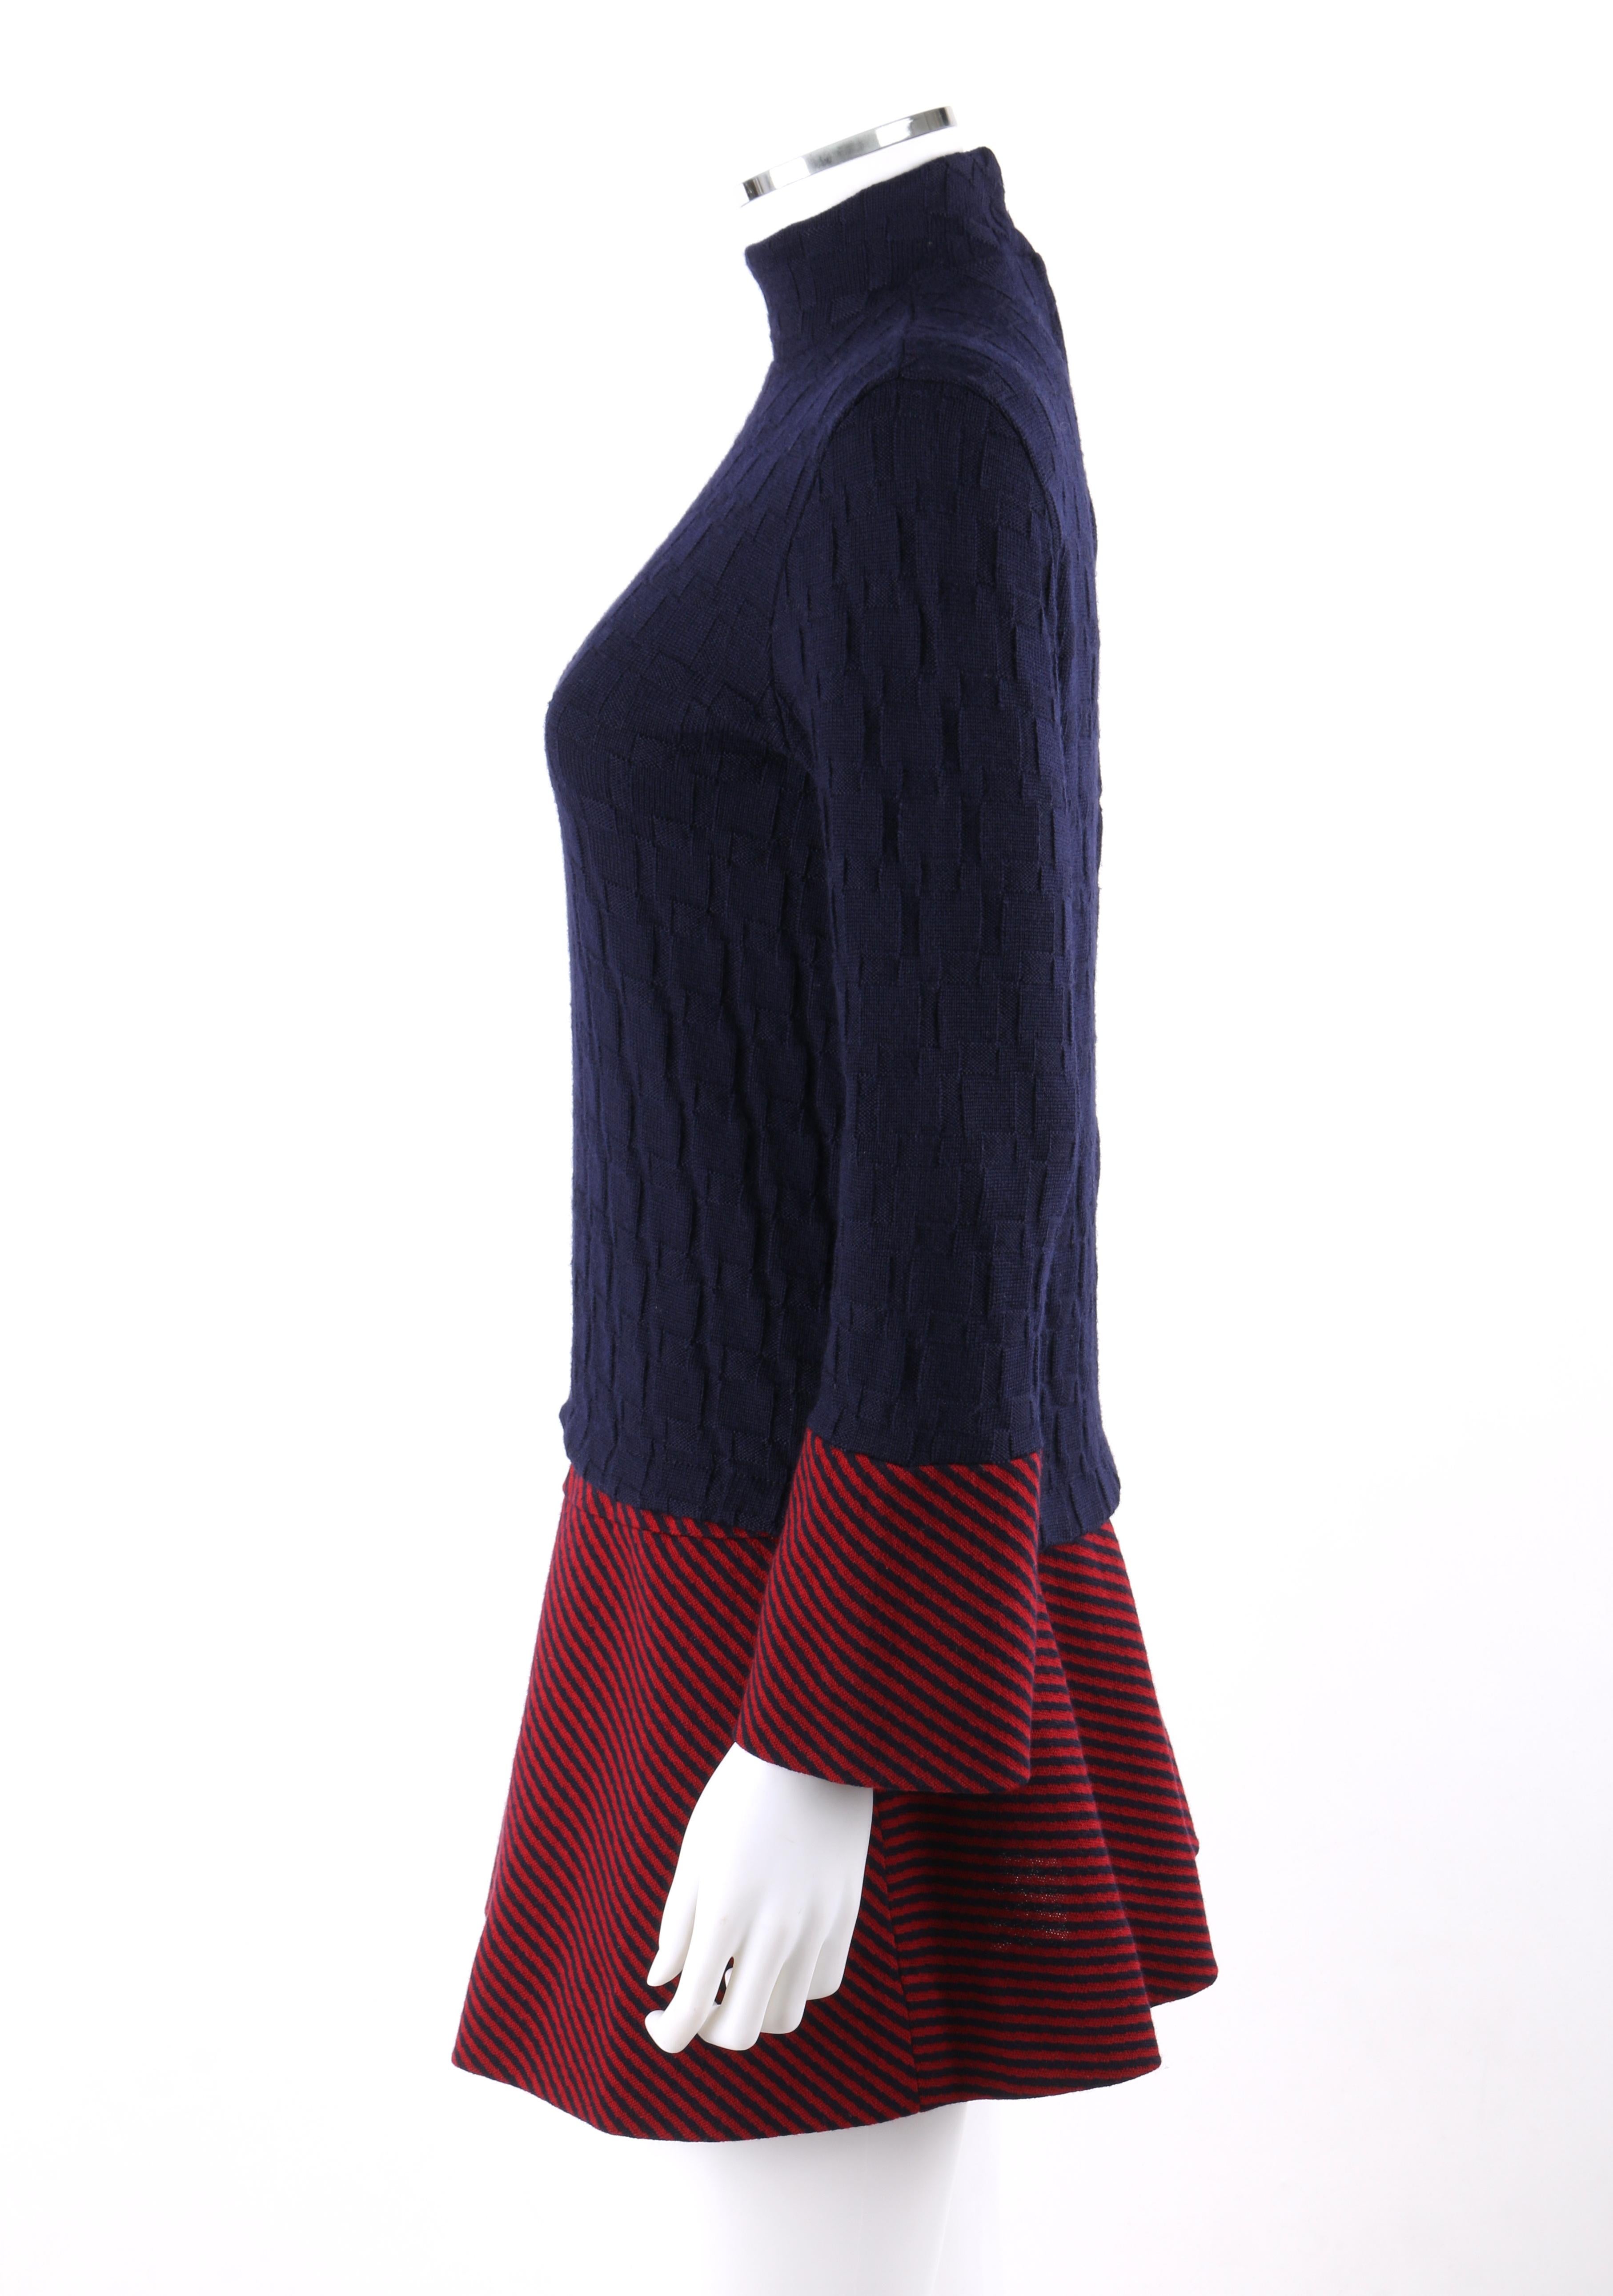 Black RUDI GERNREICH Harmon Knitwear c.1960's 2pc Raised Knit Stripe Sweater Skirt Set For Sale